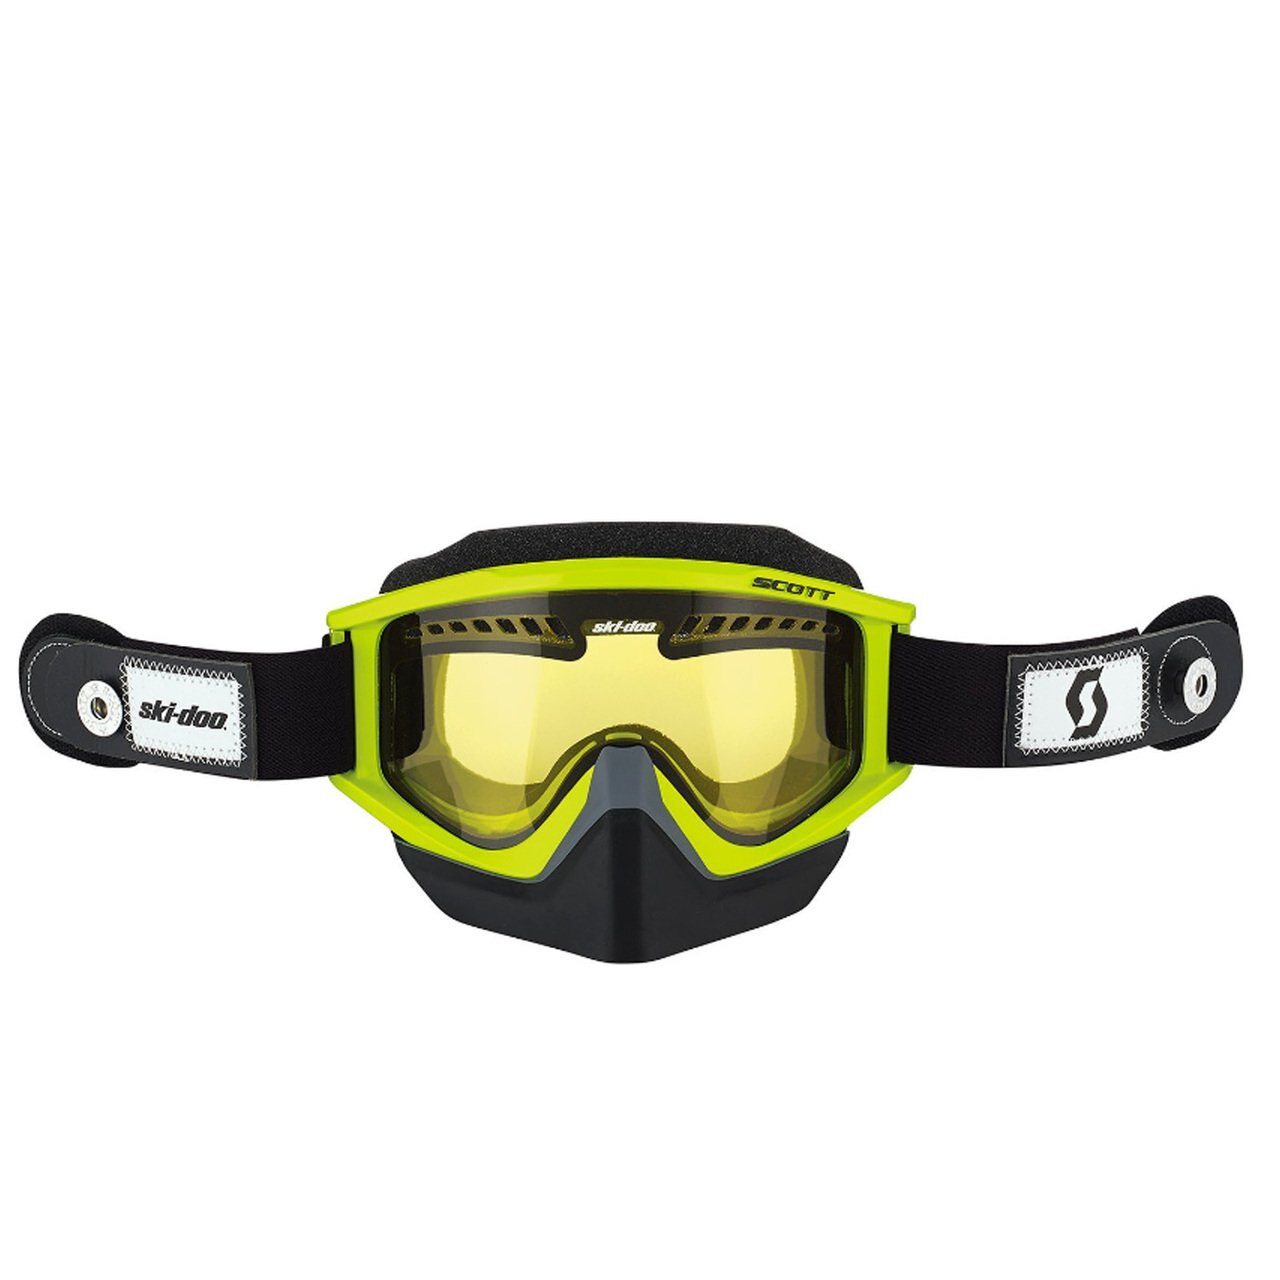 Ski Doo Holeshot Speed Strap Goggles By Scott Green